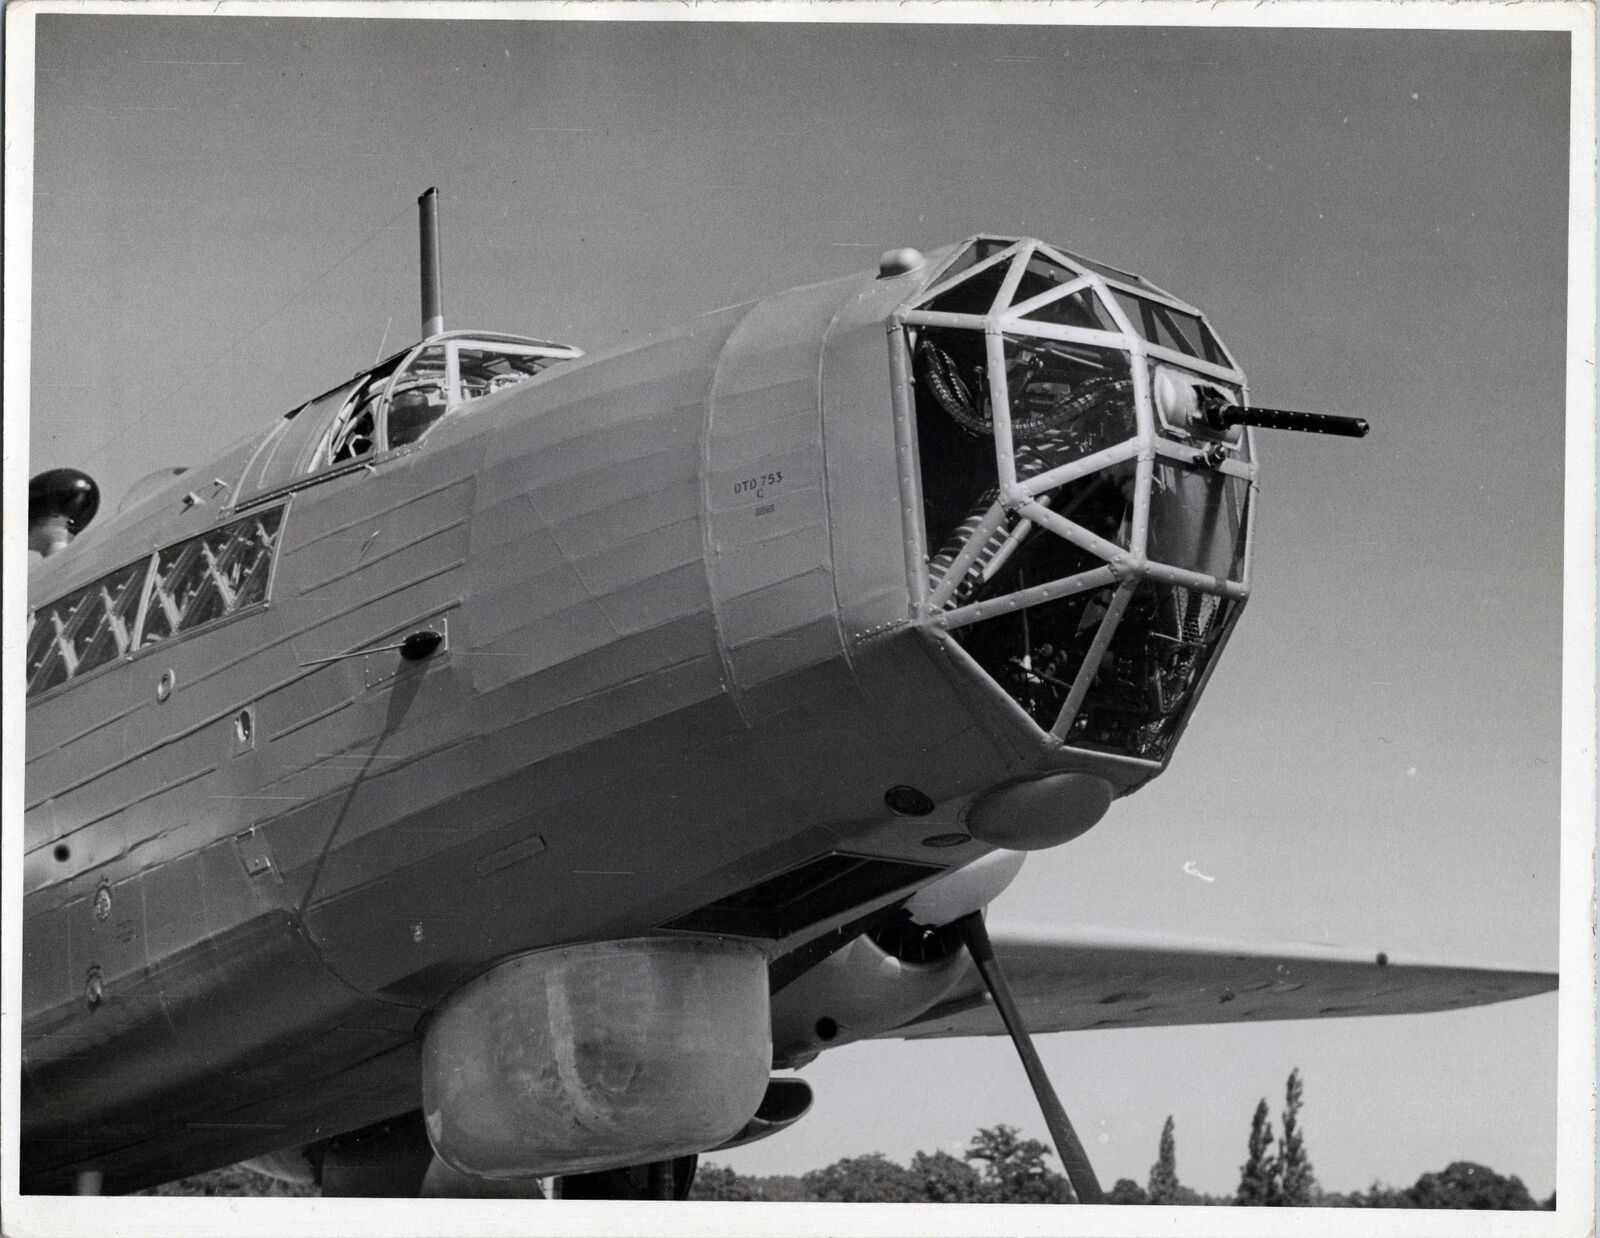 VICKERS WARWICK MARK V LM833 LARGE VINTAGE ORIGINAL PRESS PHOTO RAF 7